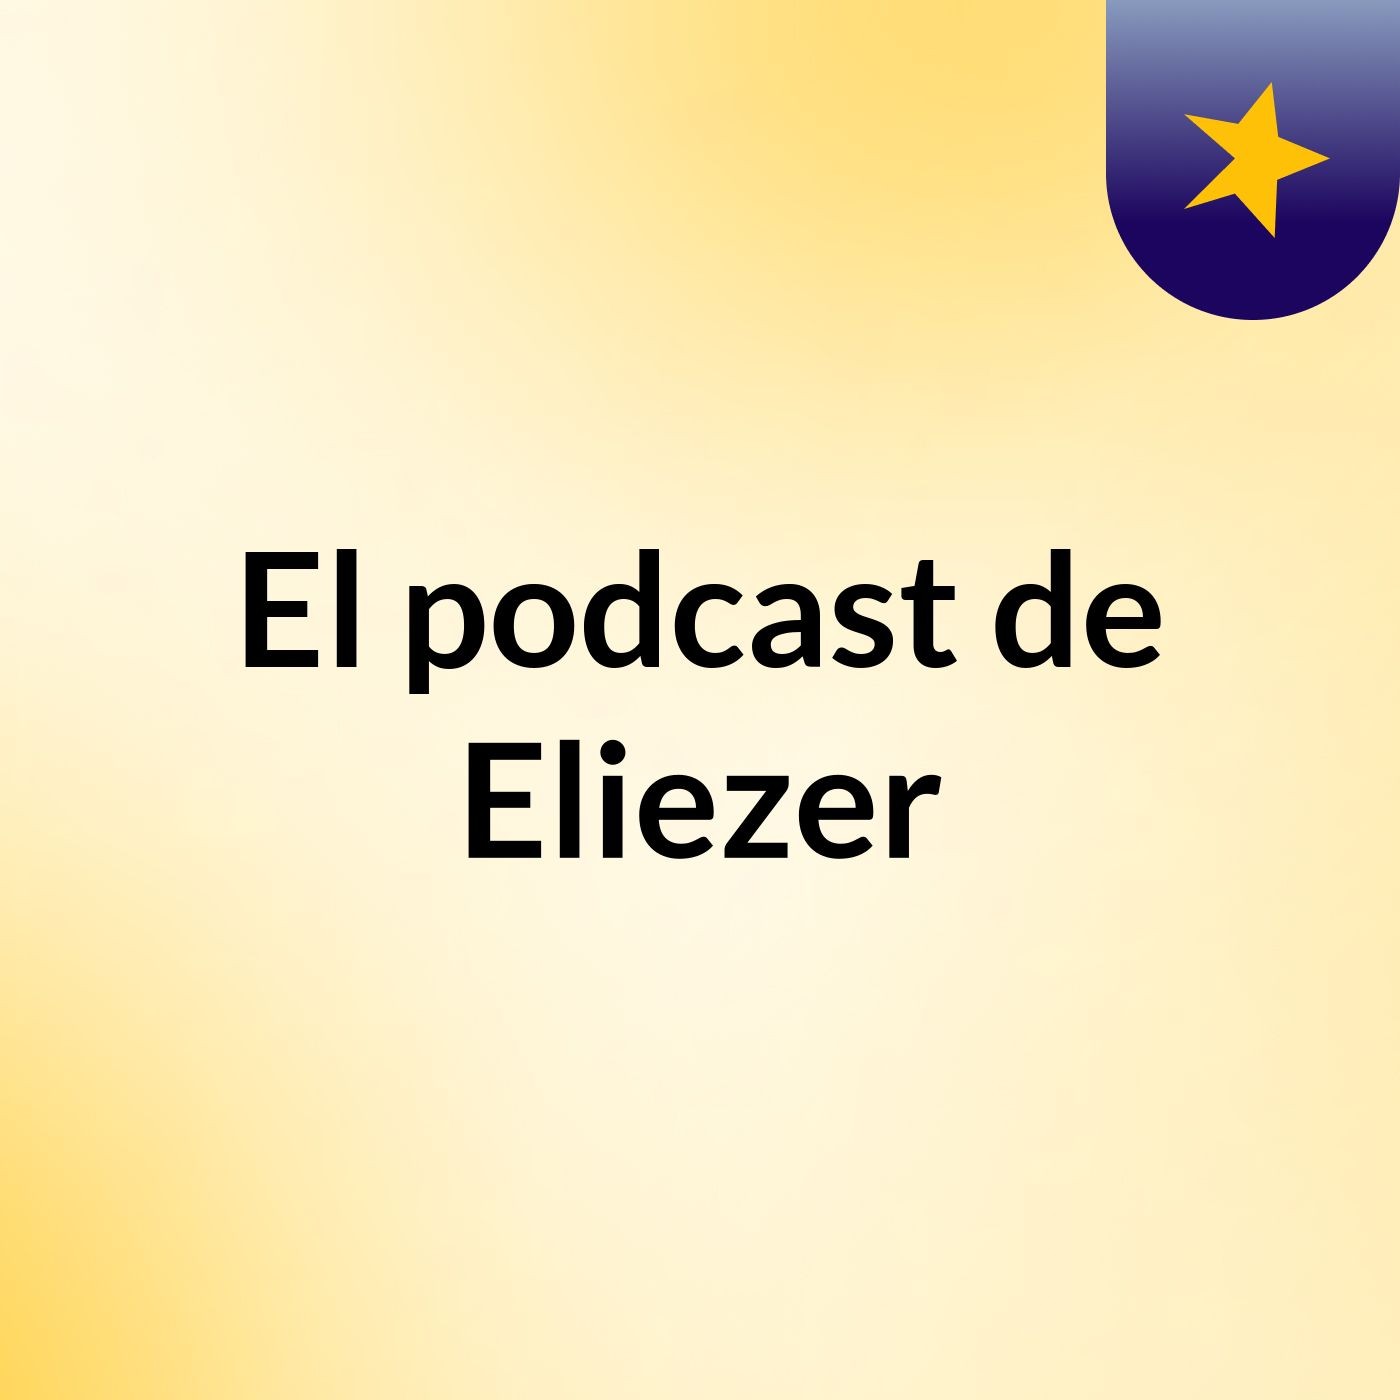 El podcast de Eliezer